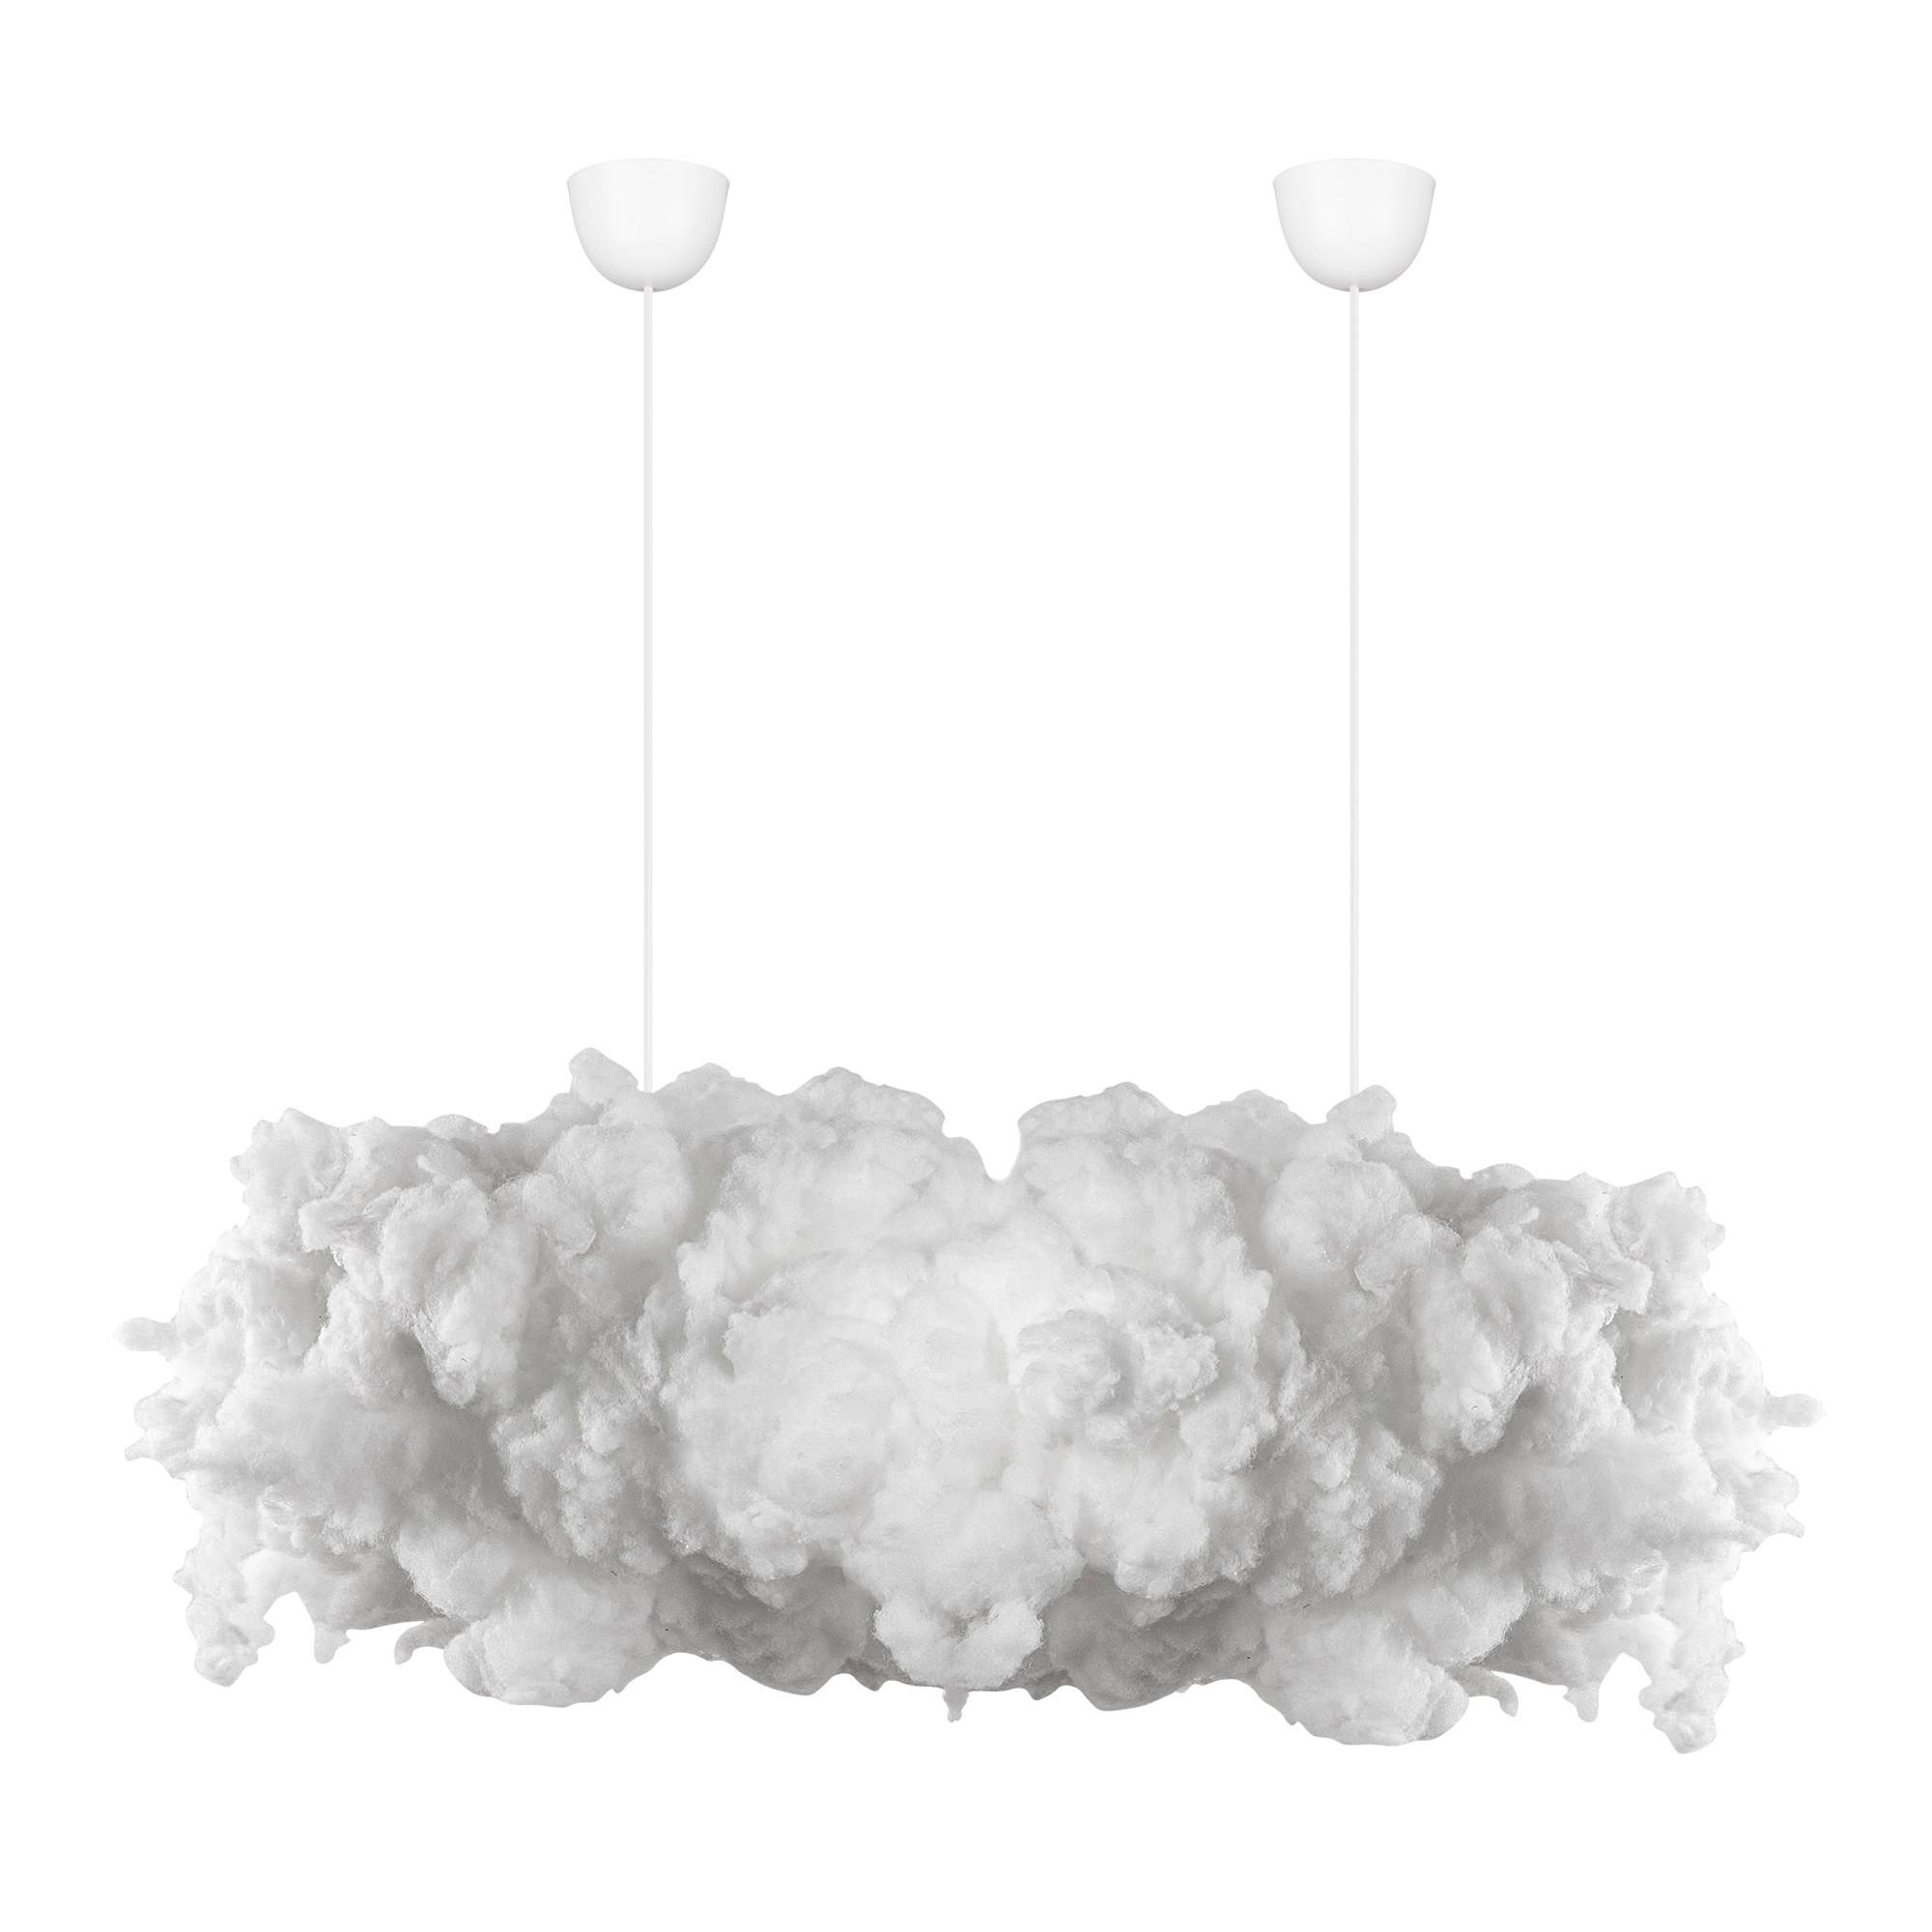 Suspensions Luminaires Nuages Coton Cloudy